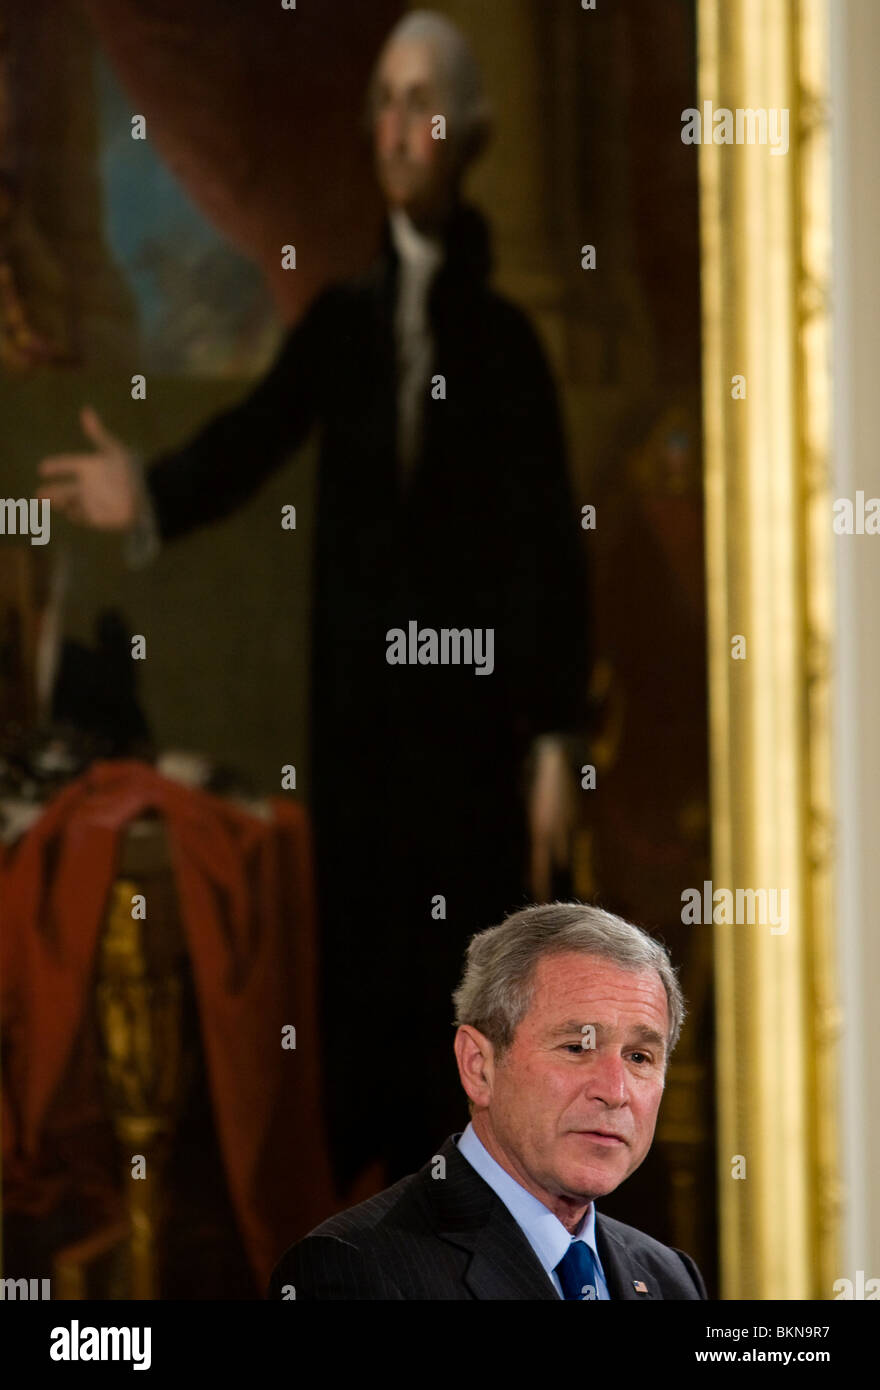 President George W Bush. Stock Photo